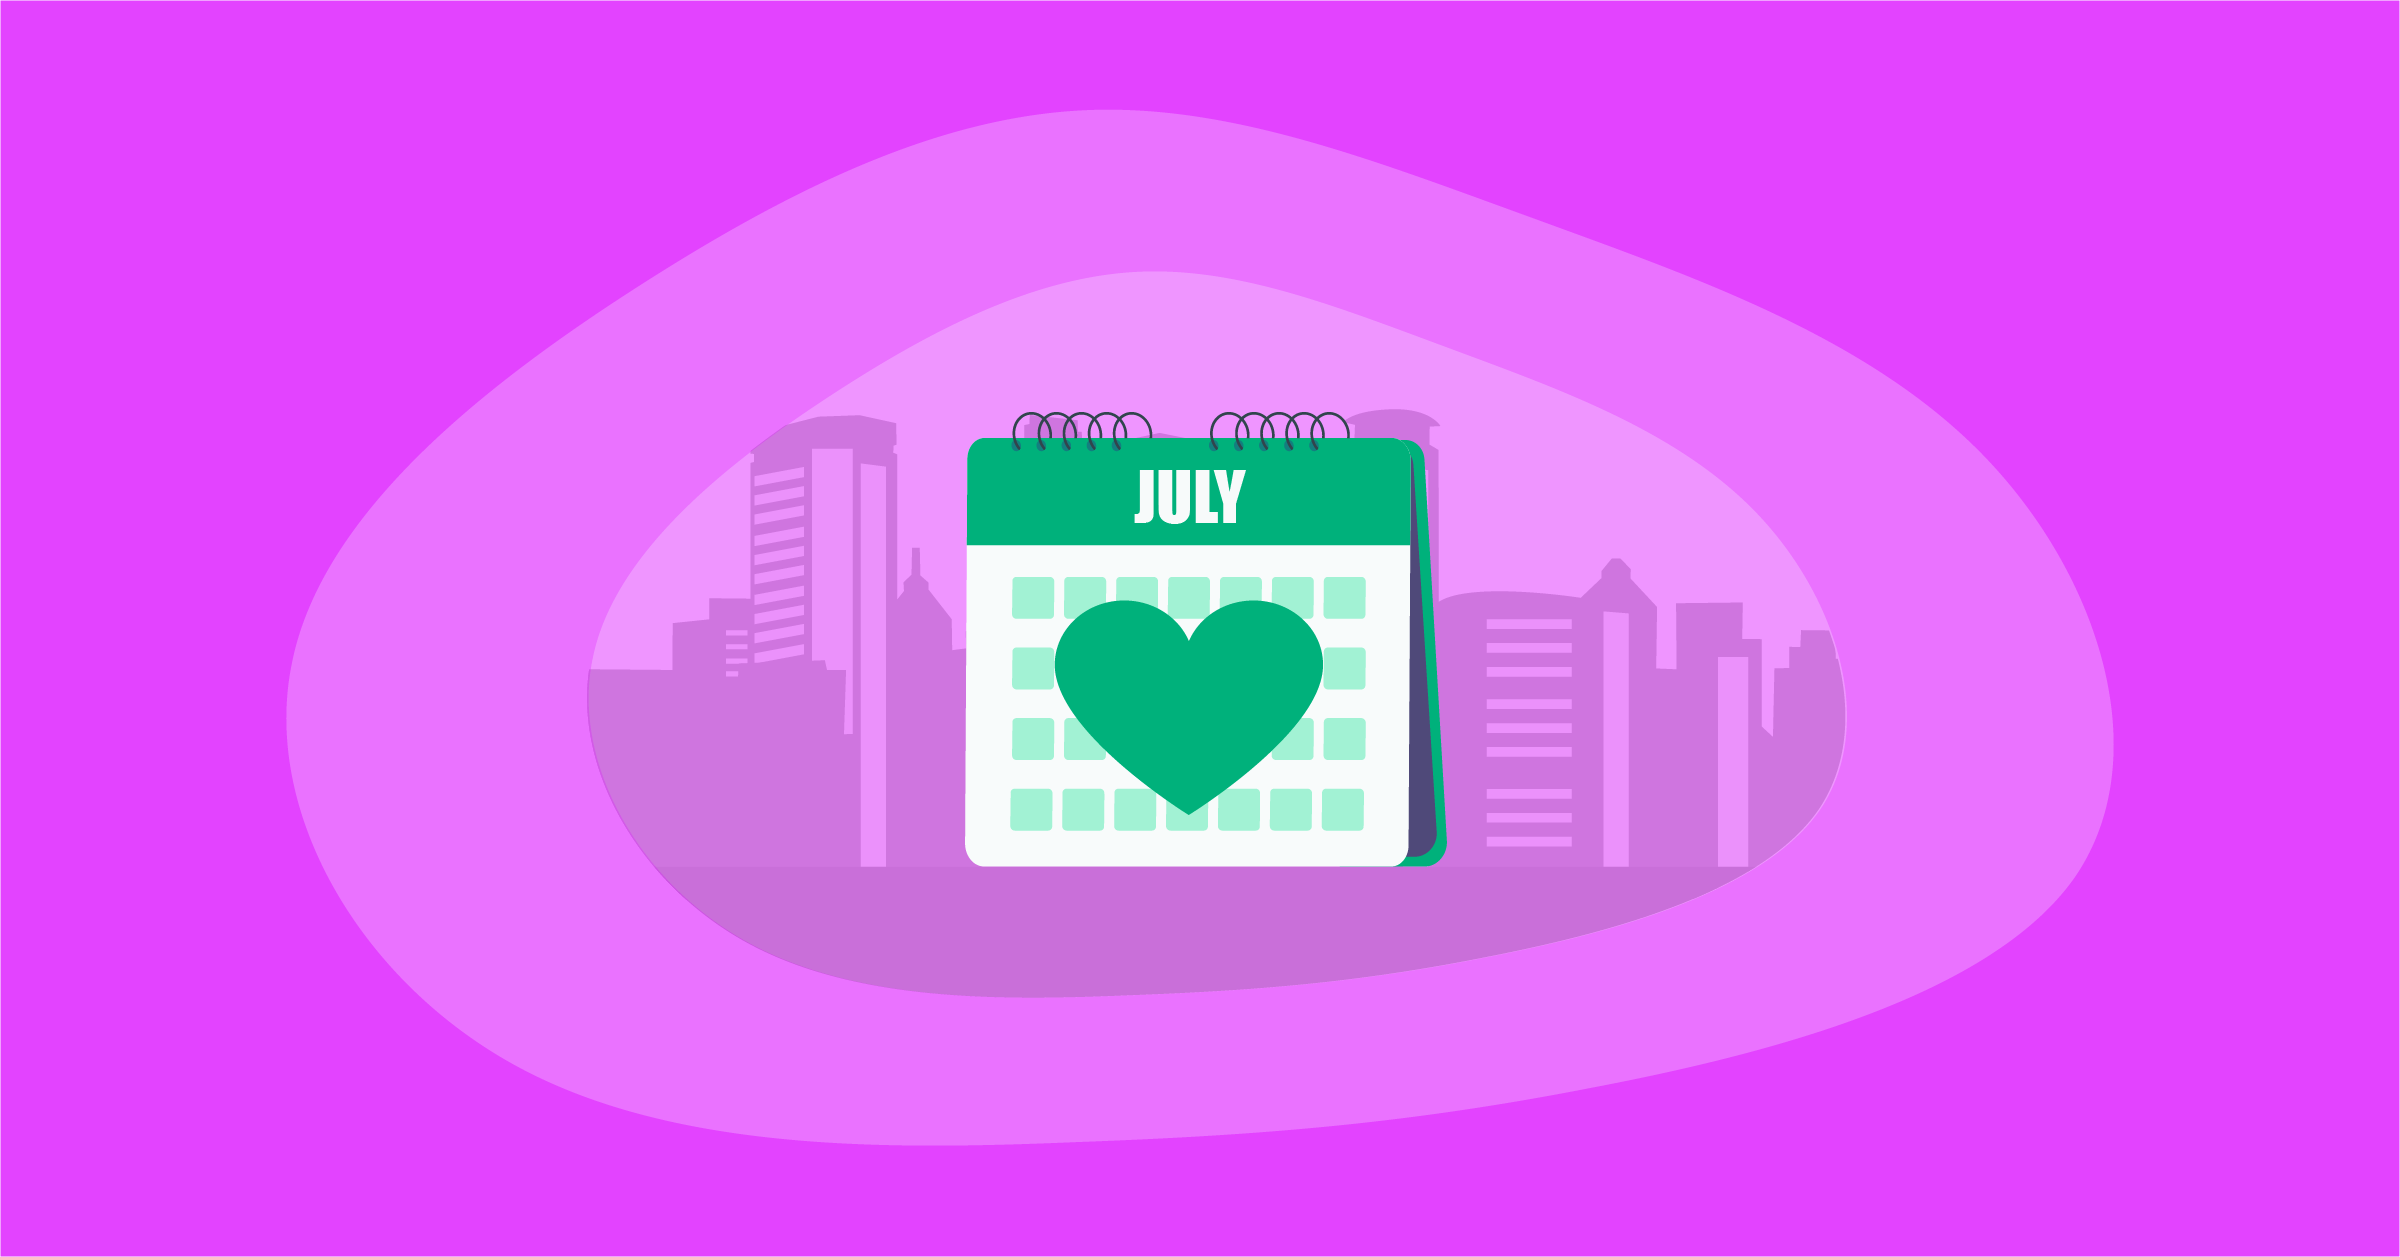 Illustration of an awareness calendar for July